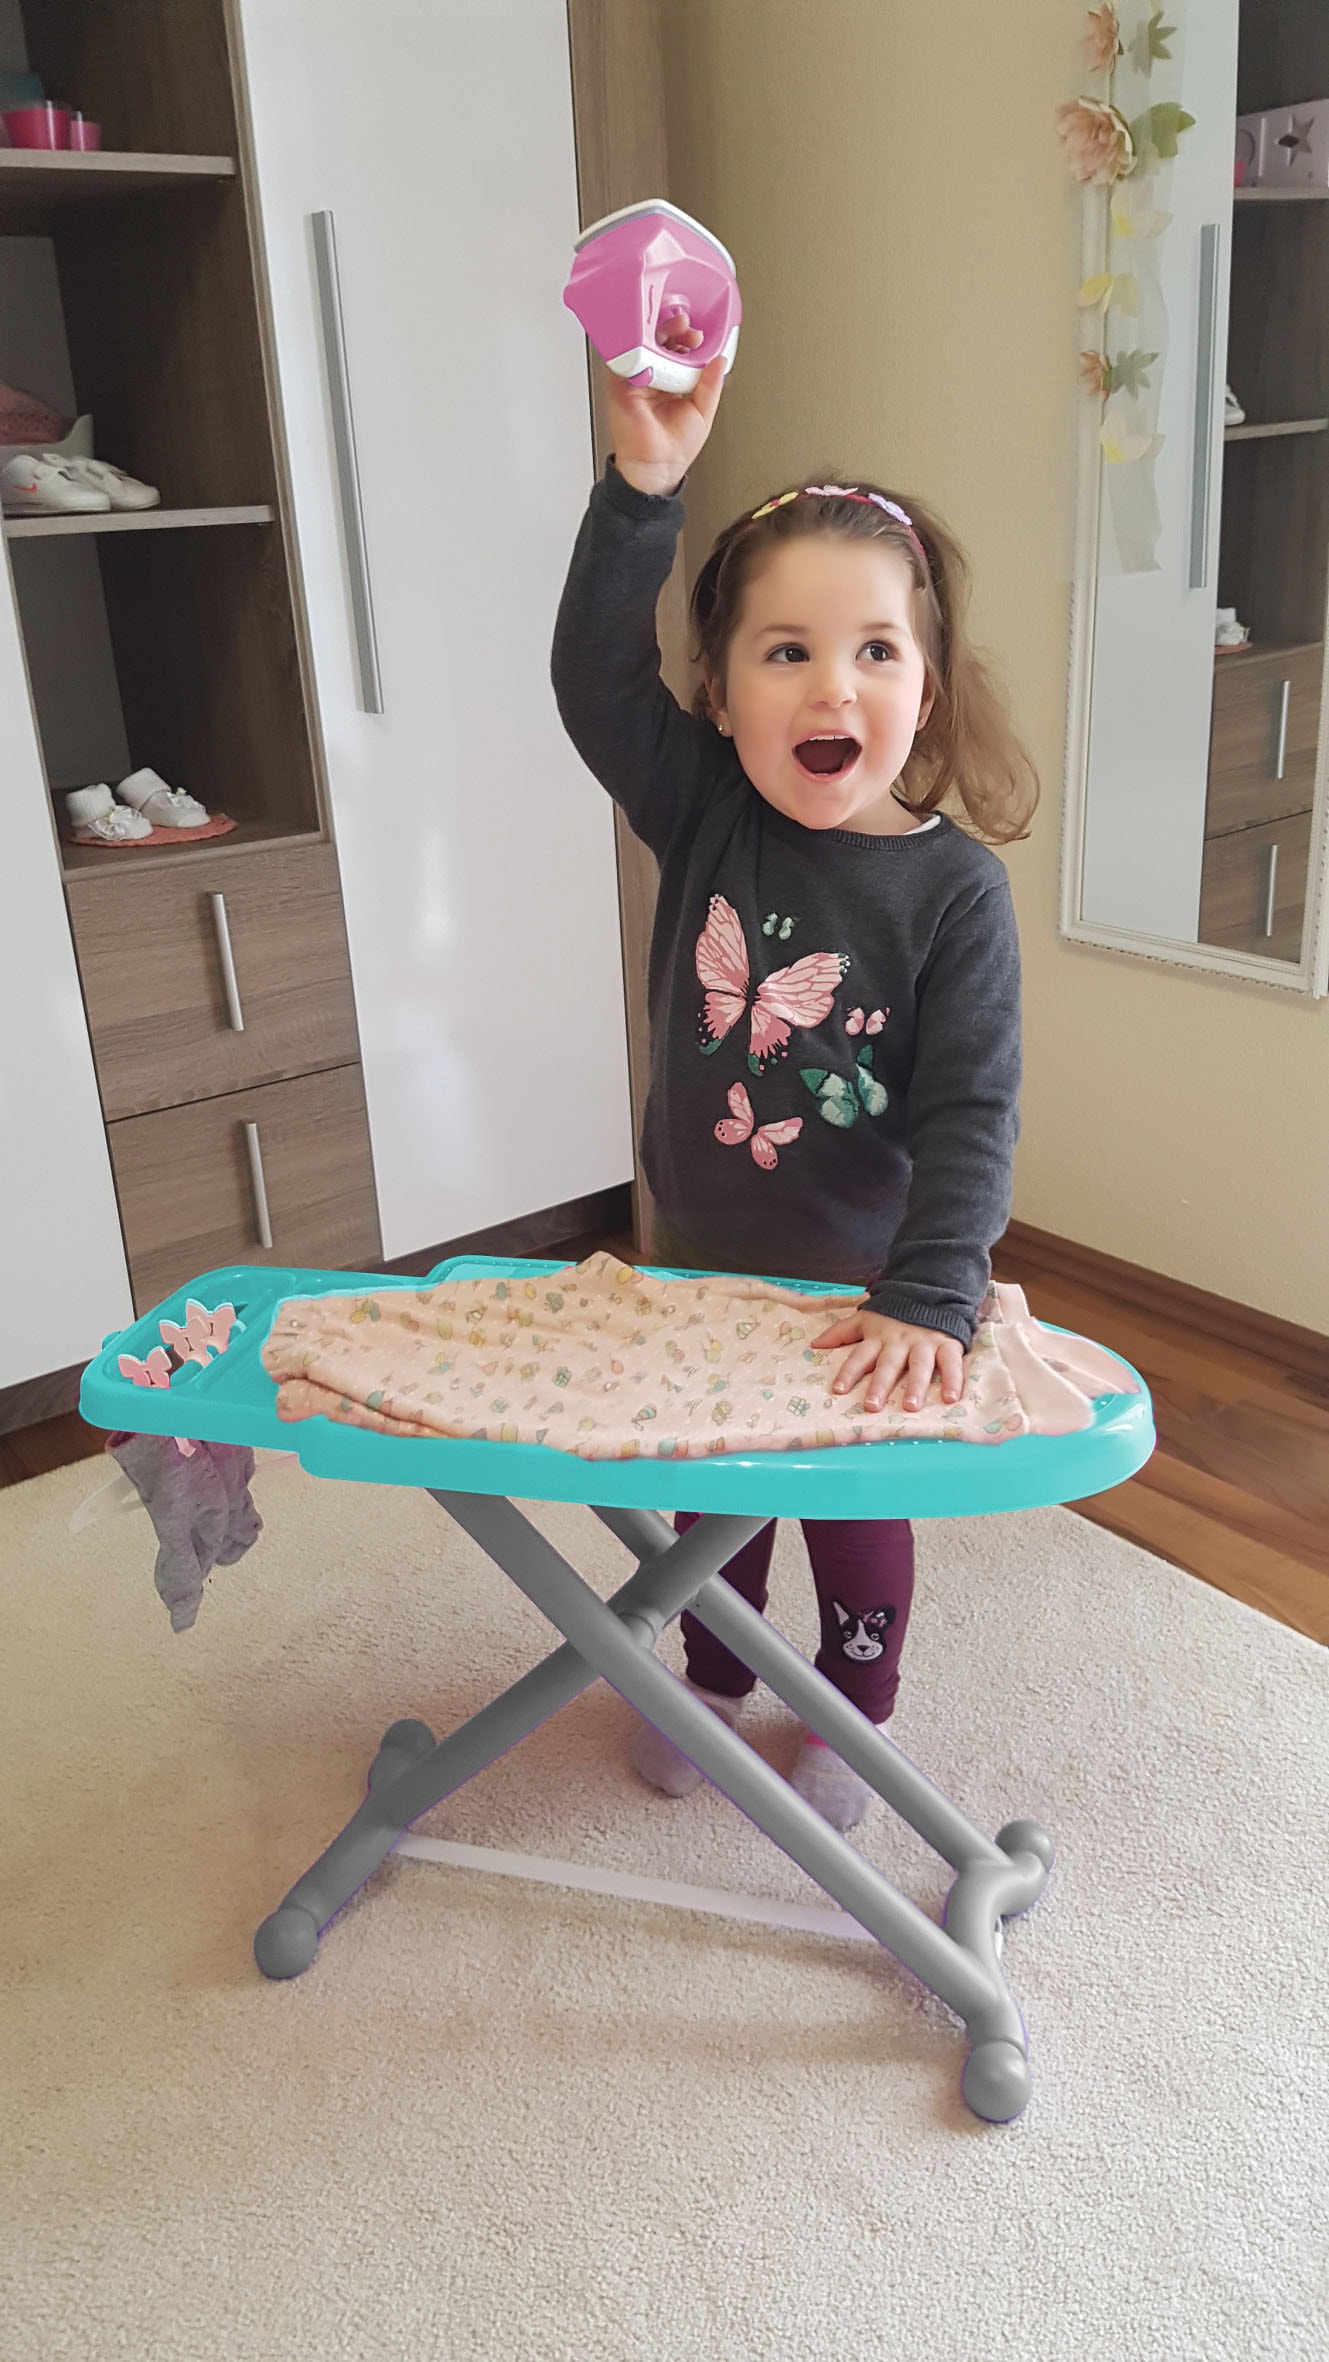 Jamara Kinder-Bügelbrett »Little Laundry Princess, türkis«, (Set, 6 tlg.), inklusive Spielzeugbügeleisen